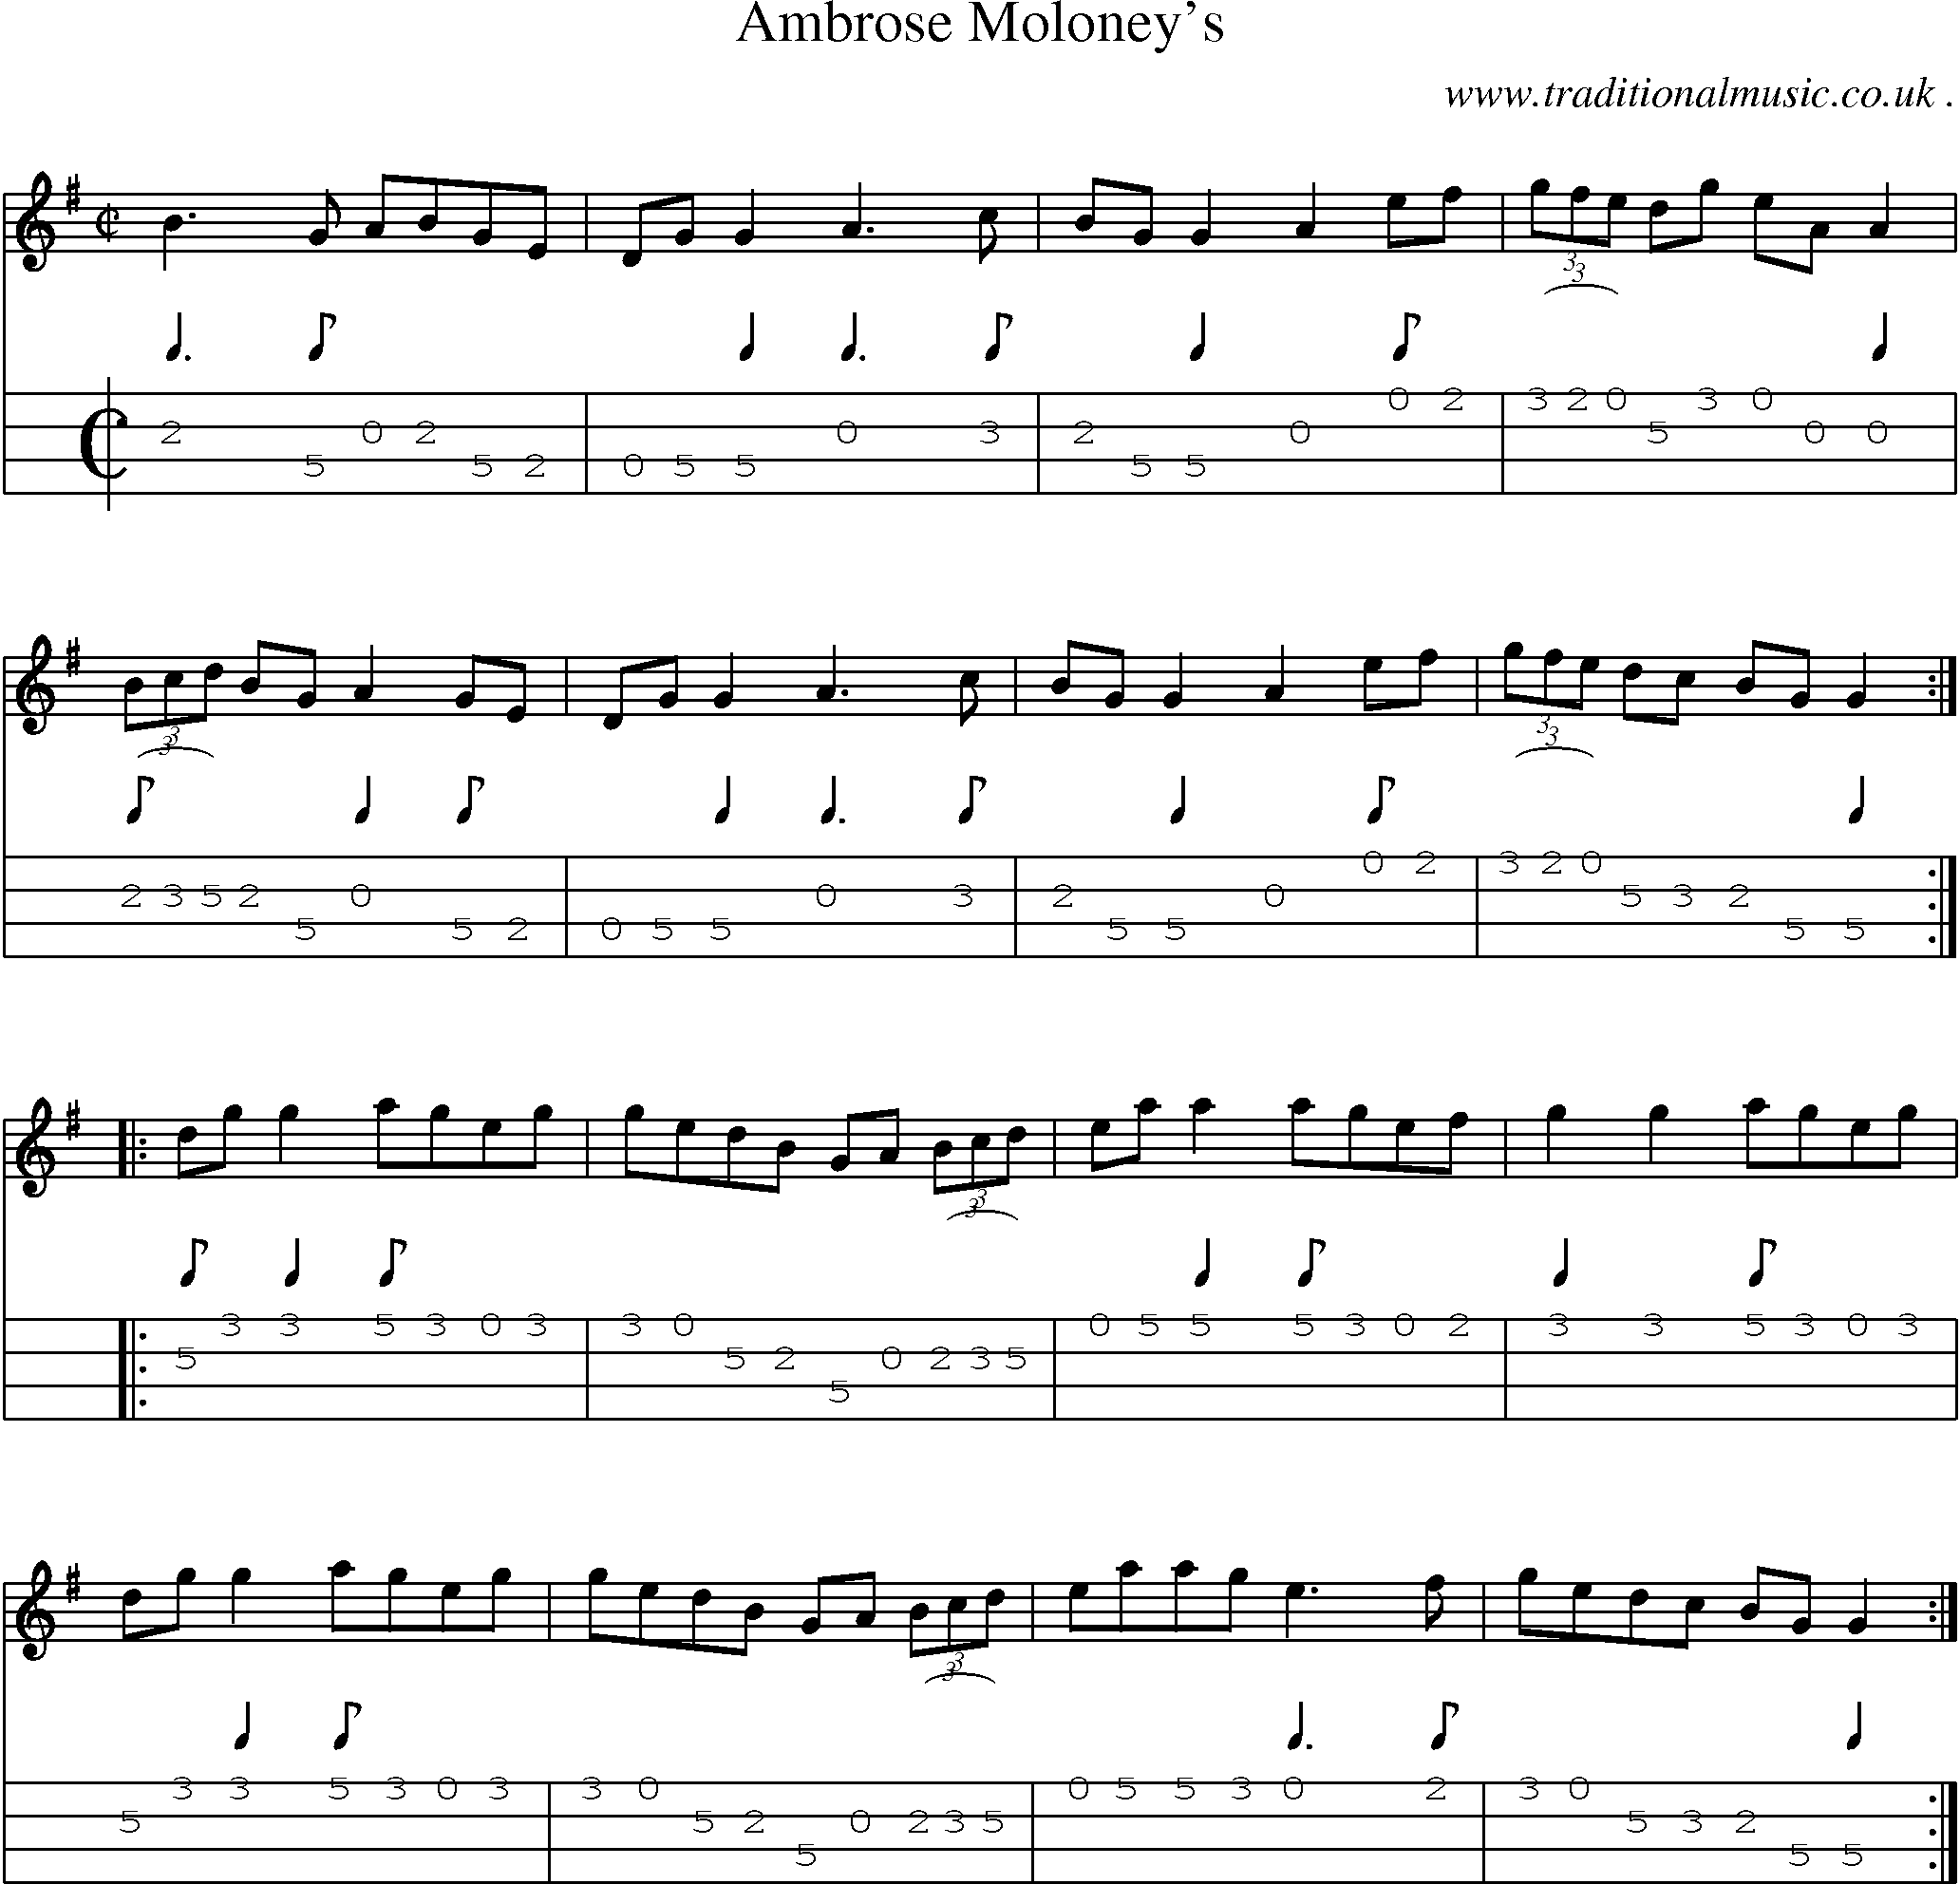 Sheet-Music and Mandolin Tabs for Ambrose Moloneys